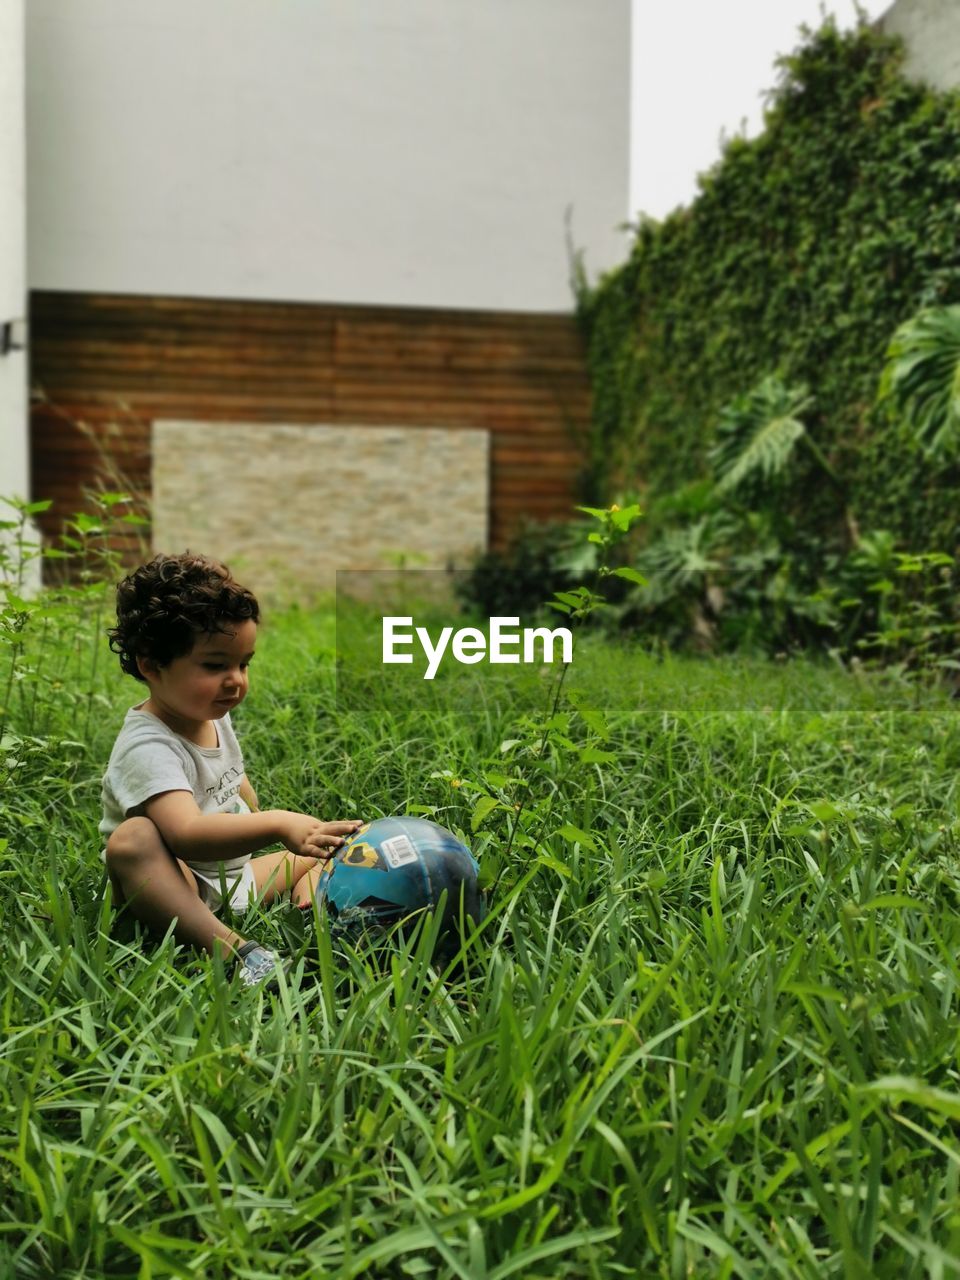 Boy sitting on grassy field outdoors